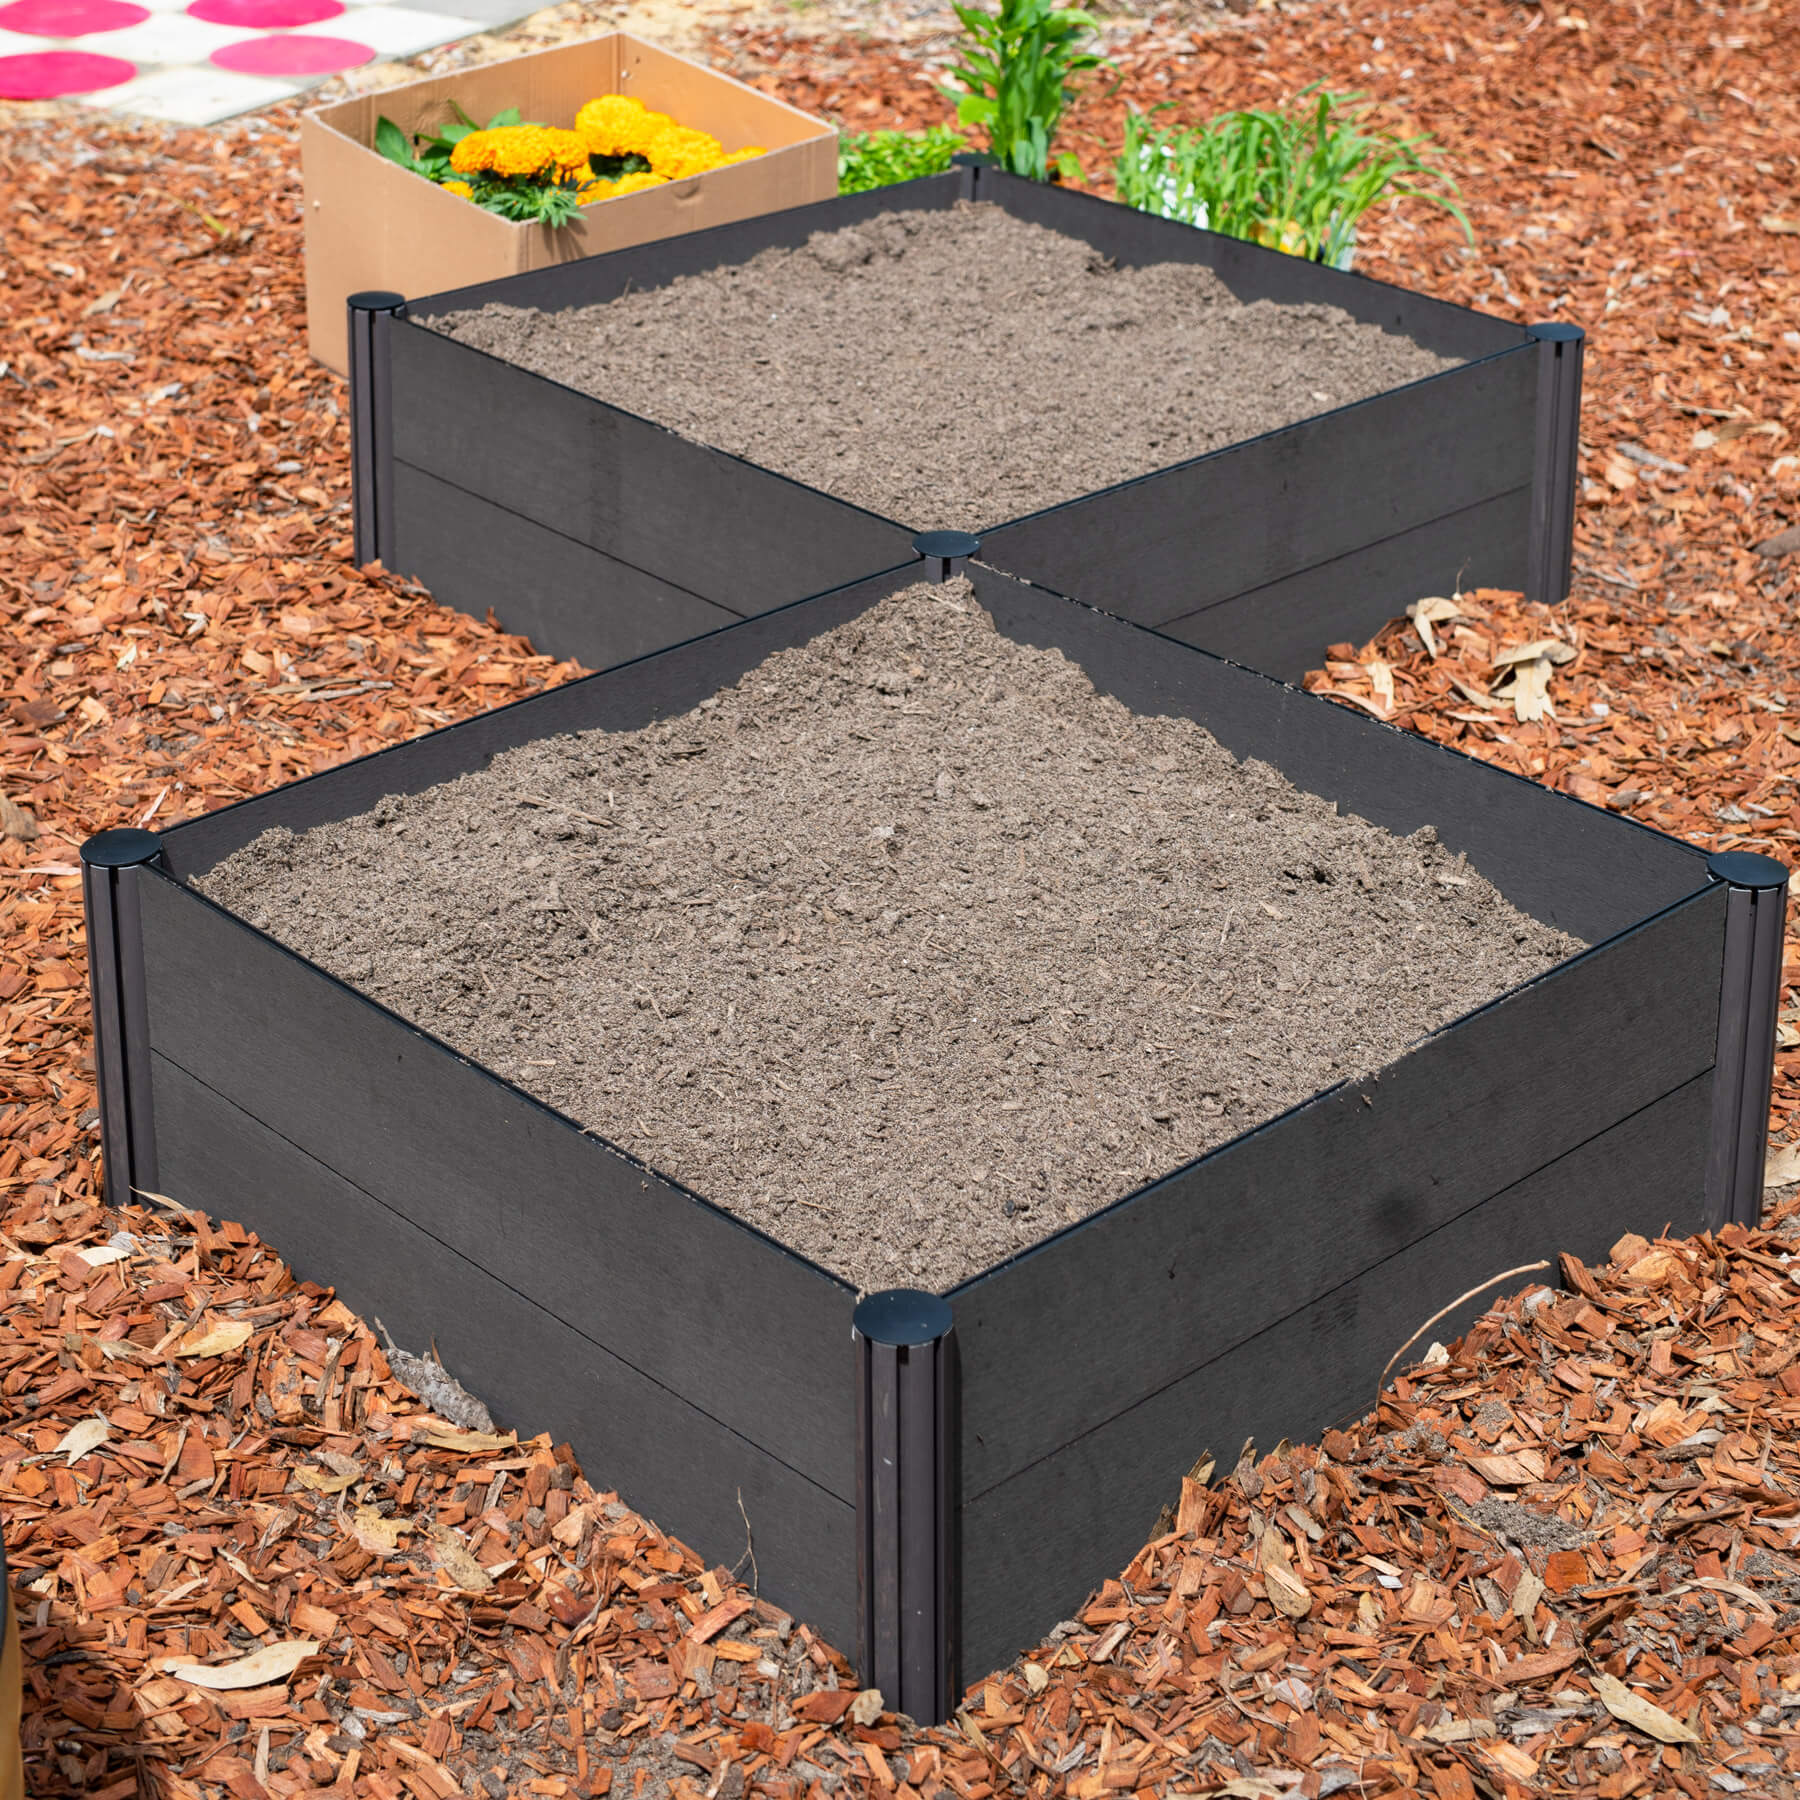 Preparre your garden beds for spring - soil